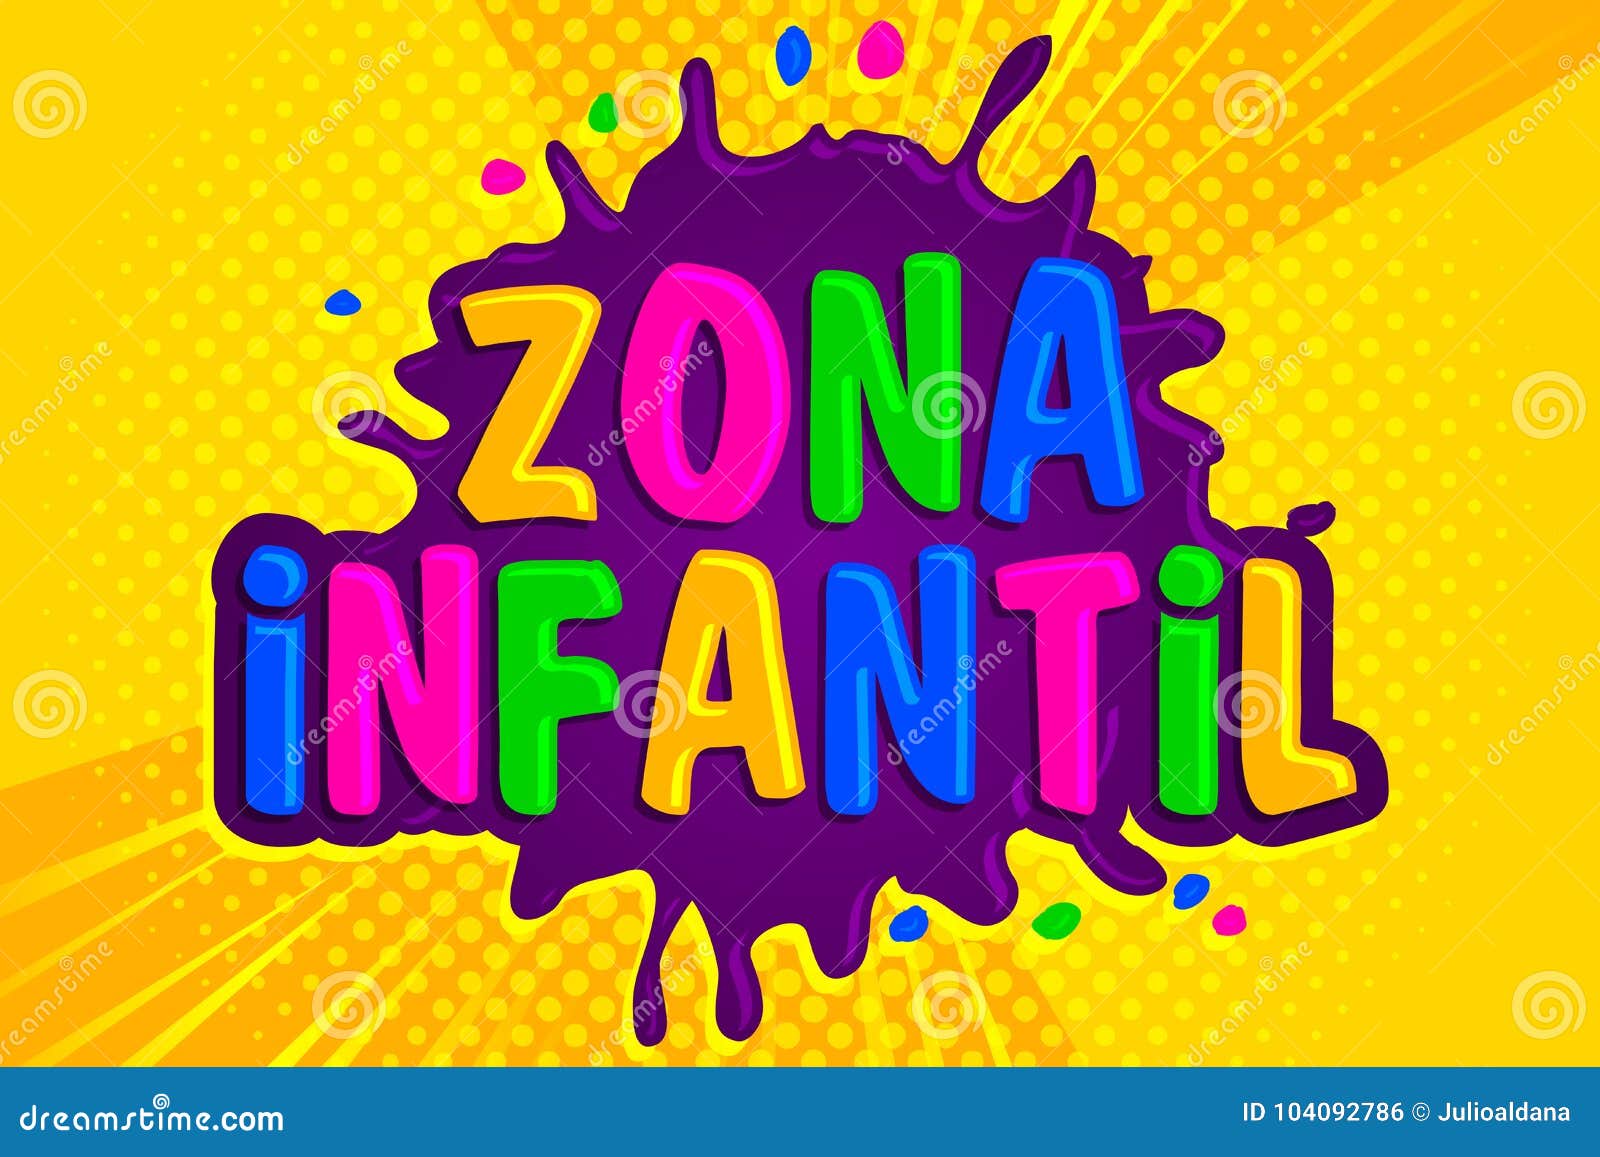 zona infantil, children zone spanish text